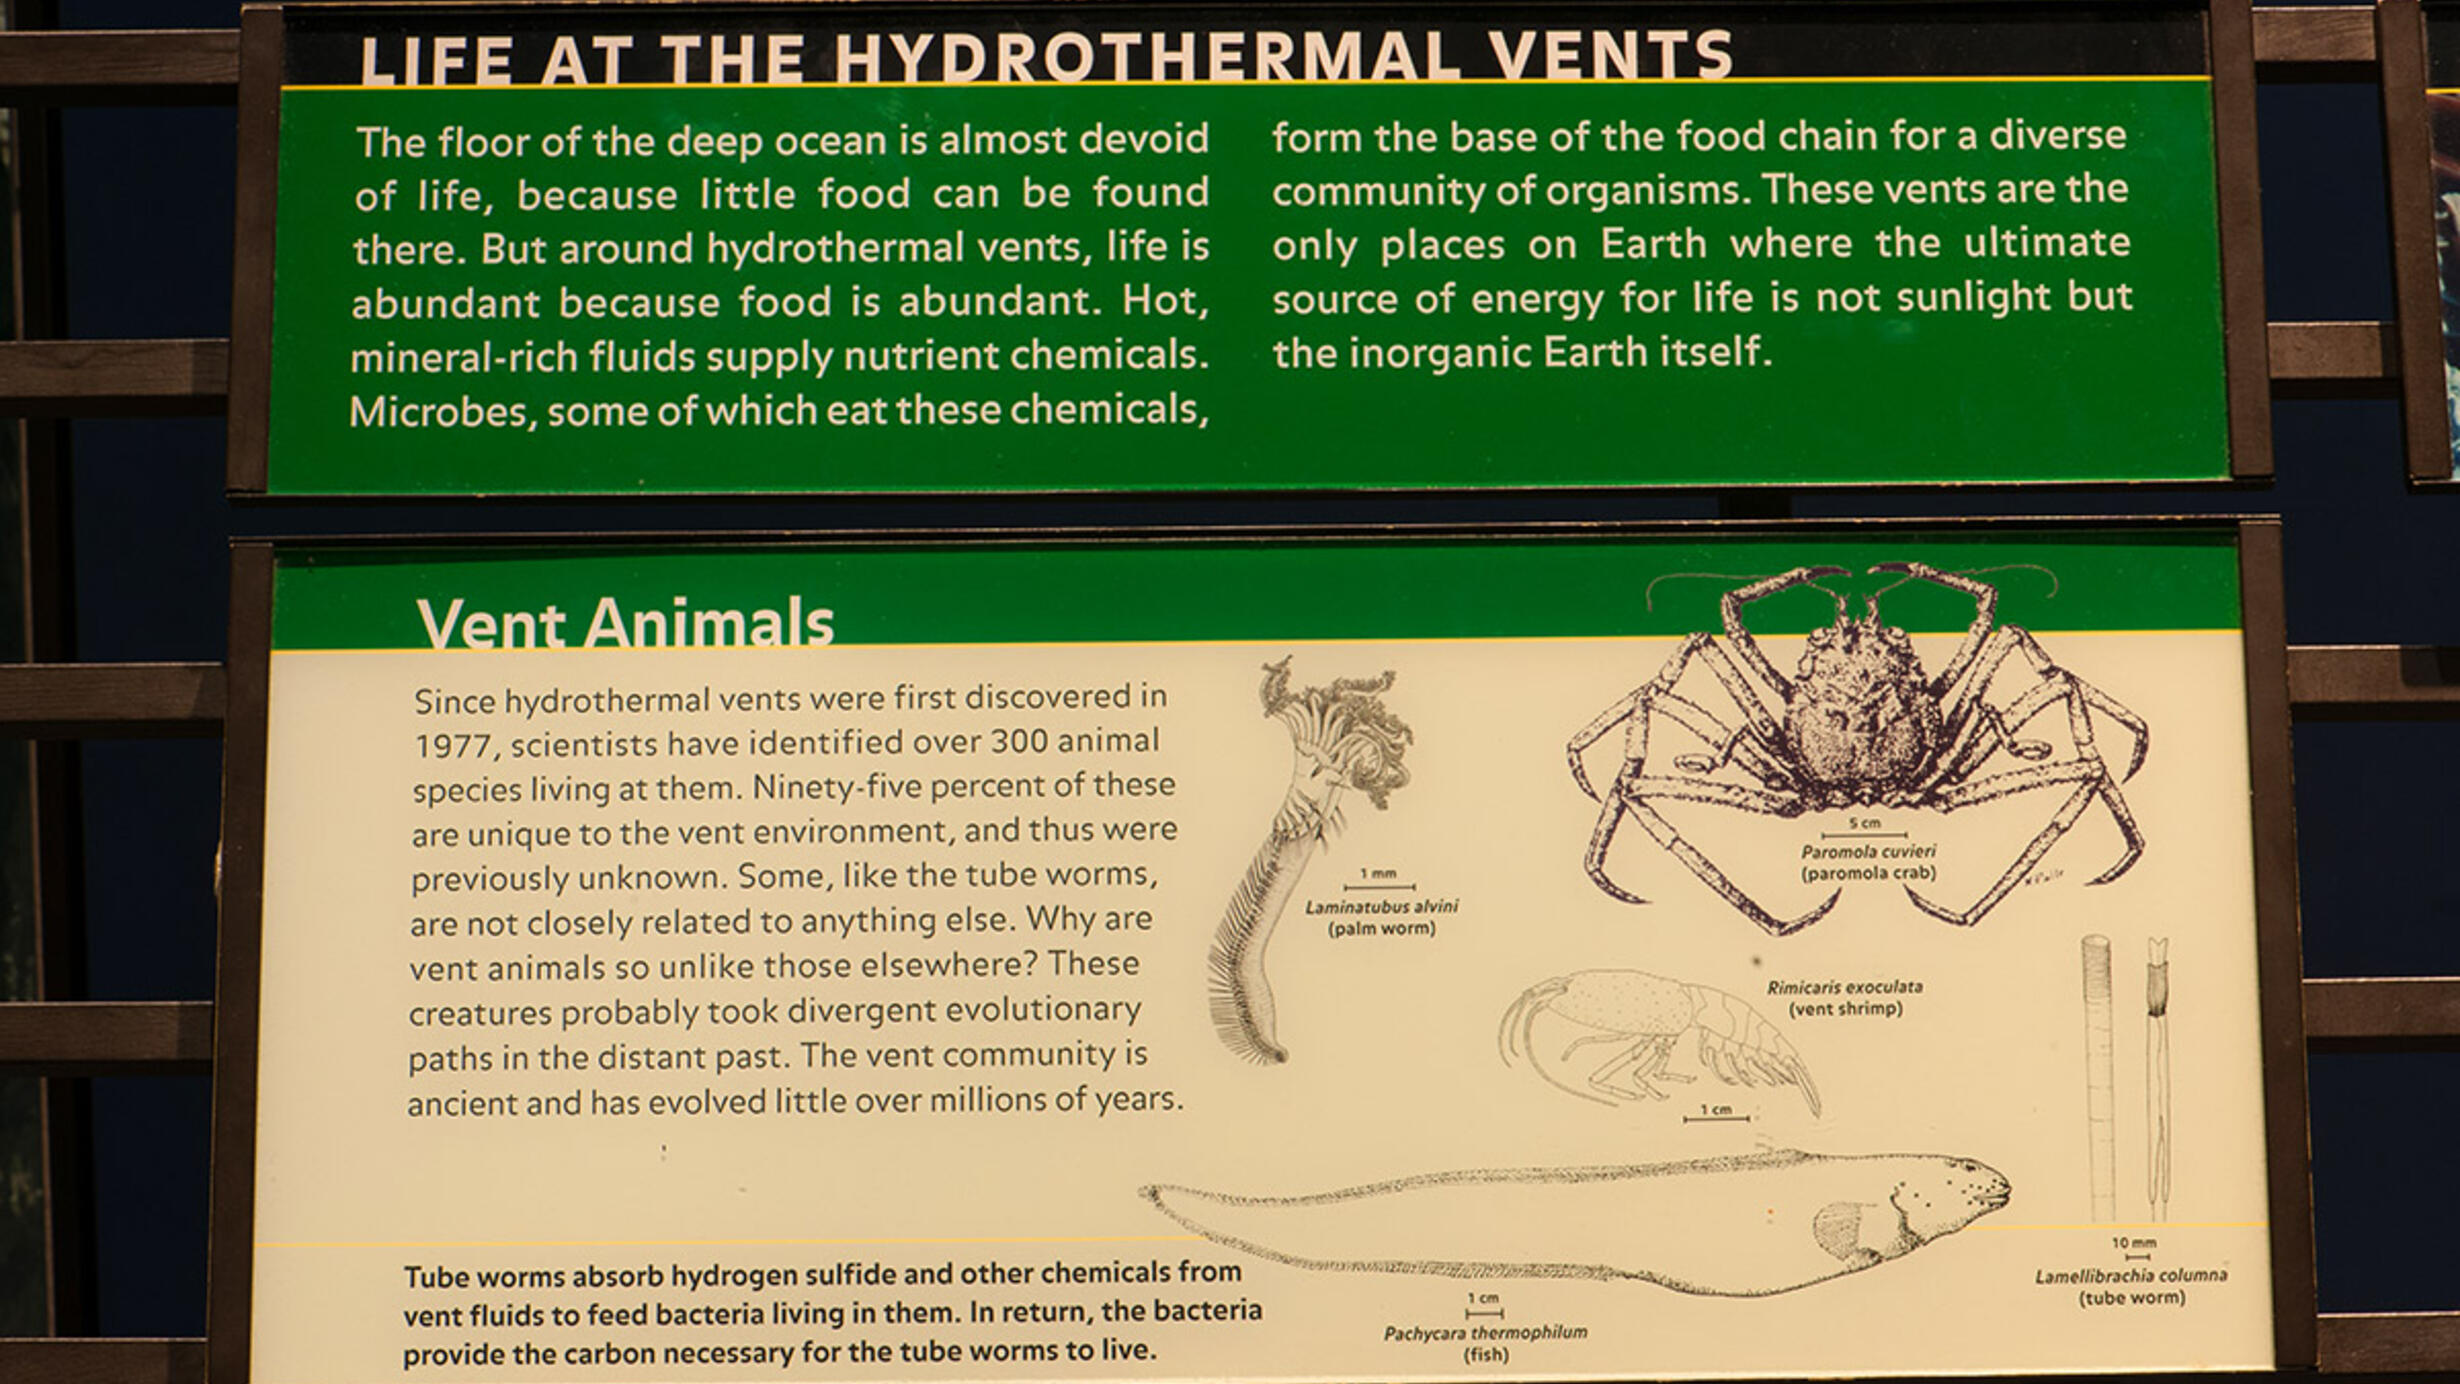 Life at Hydrothermal Vents